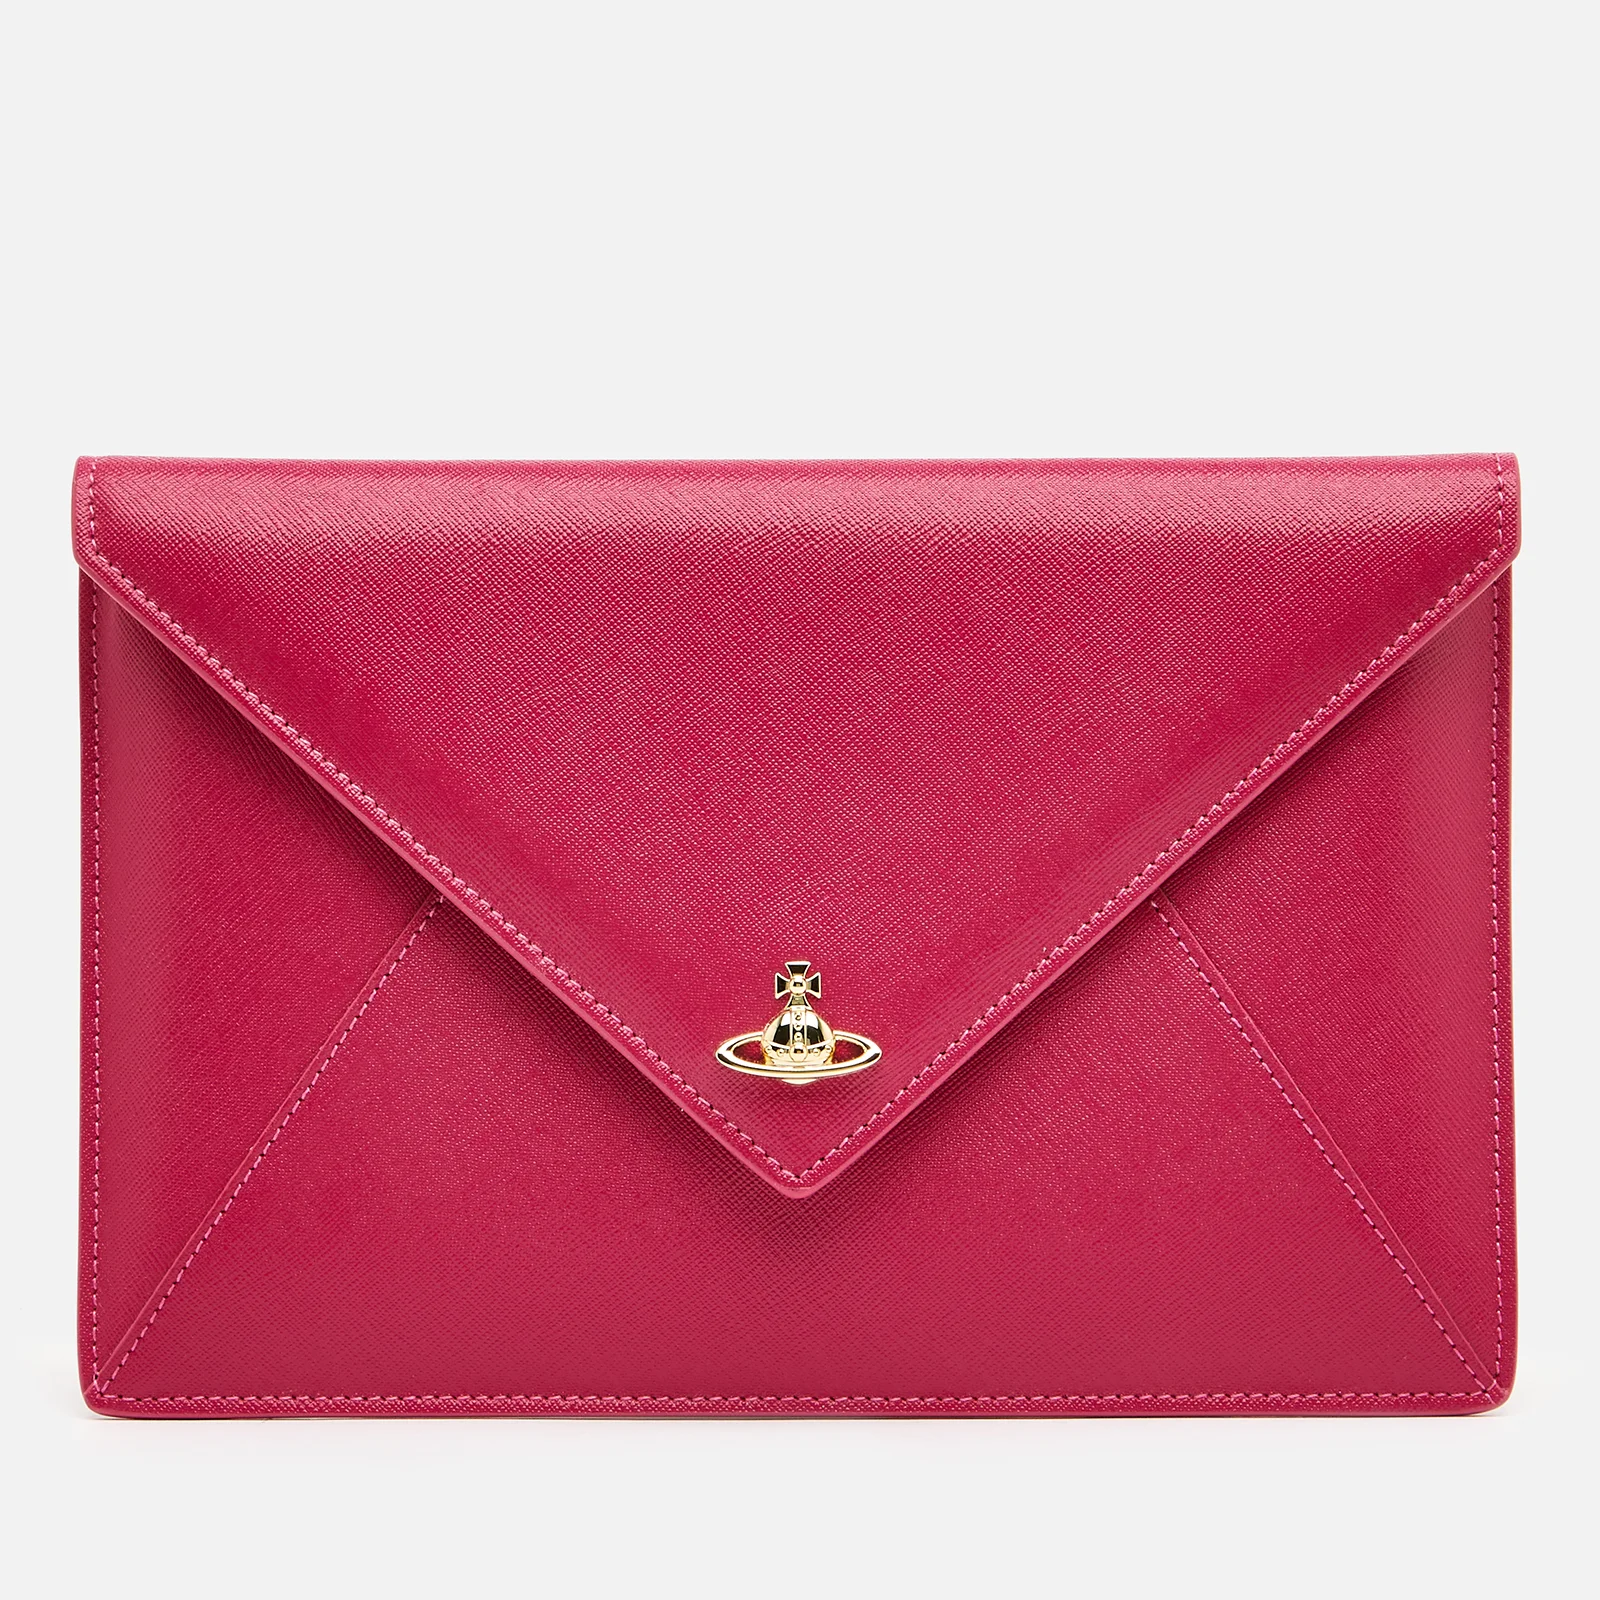 Vivienne Westwood Women's Victoria Envelope Clutch Bag - Pink Image 1